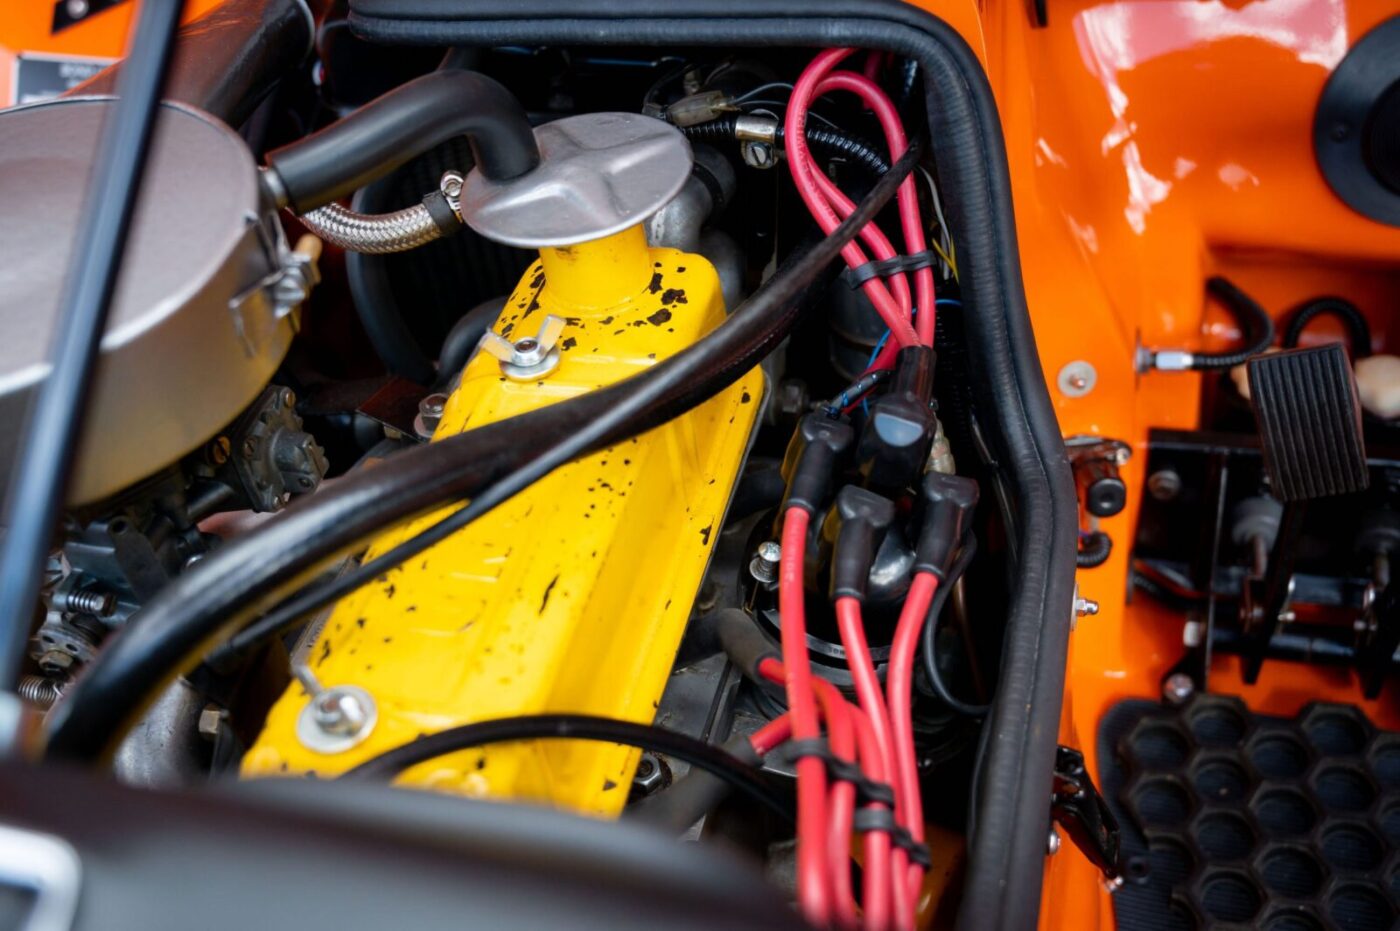 Bond Bug 750cc engine